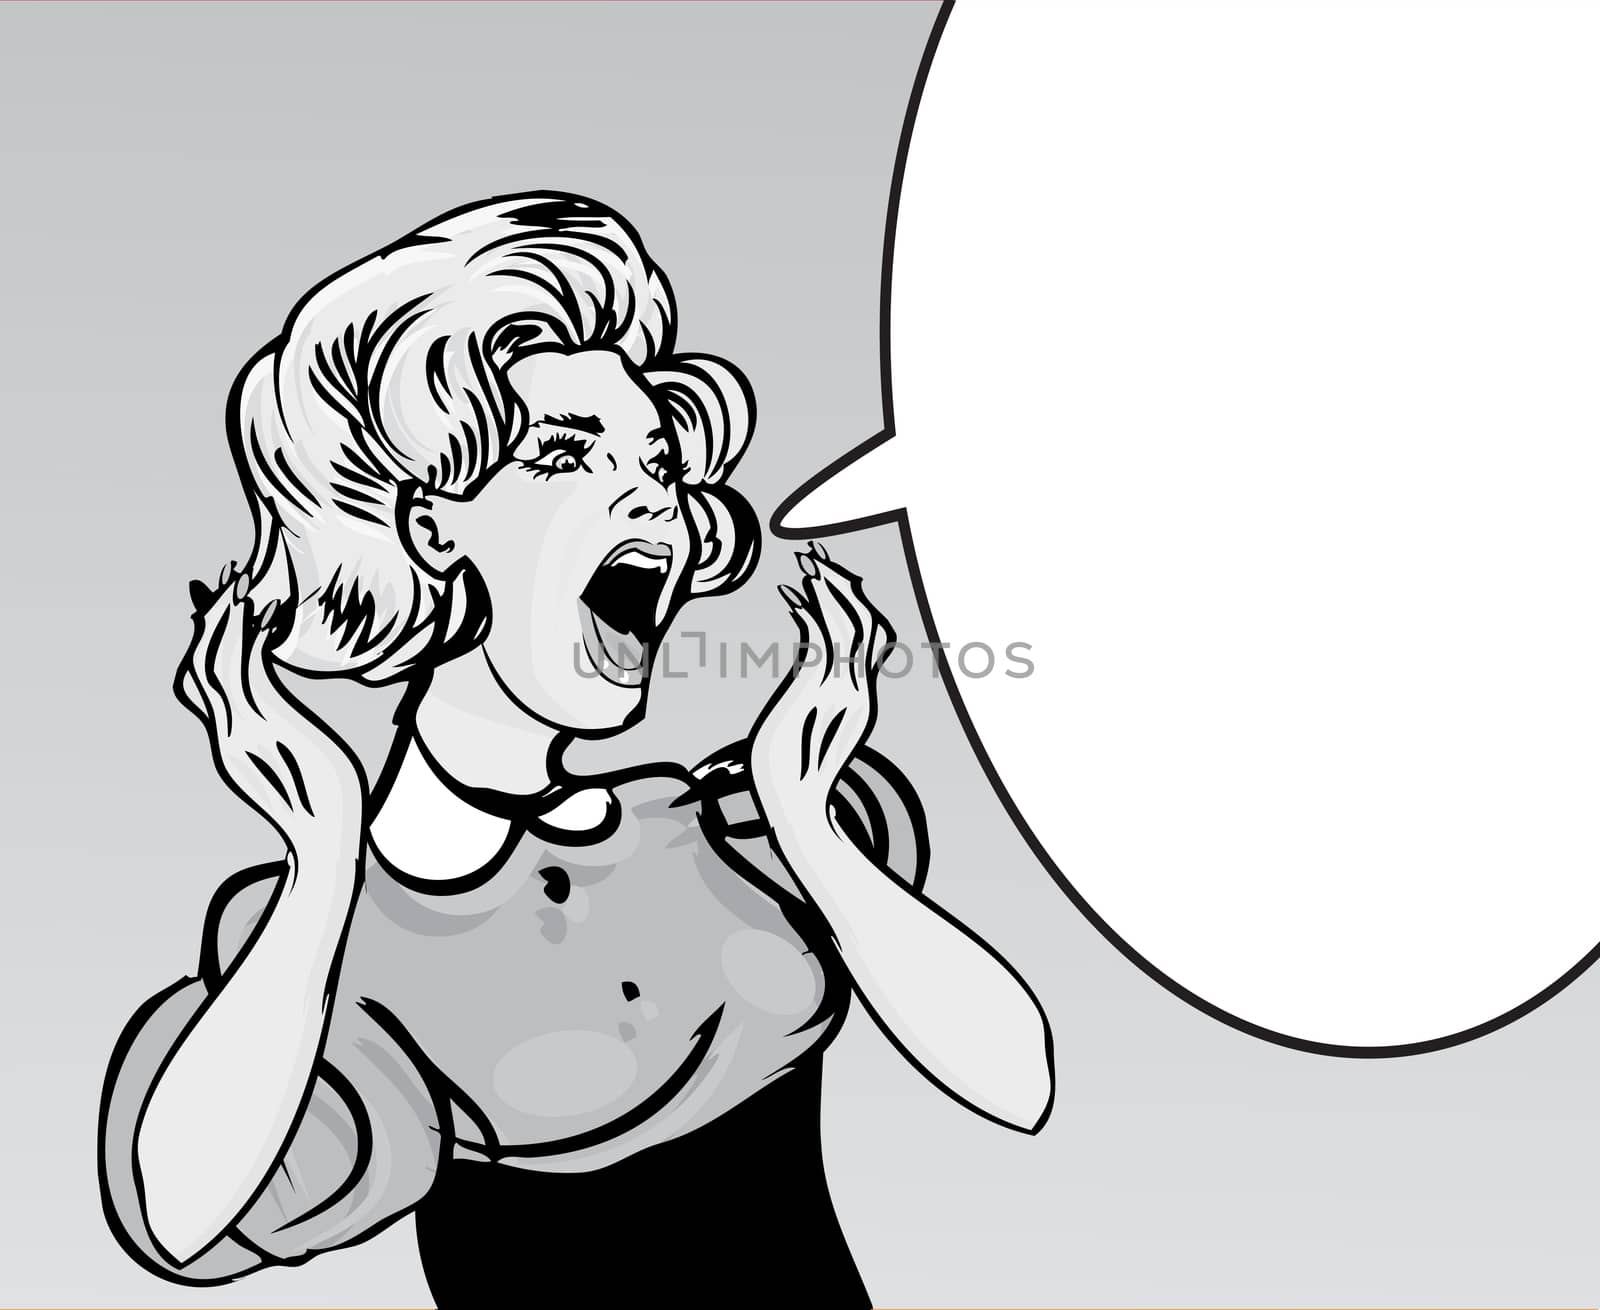 Retro Woman Screaming Love Comic Illustration